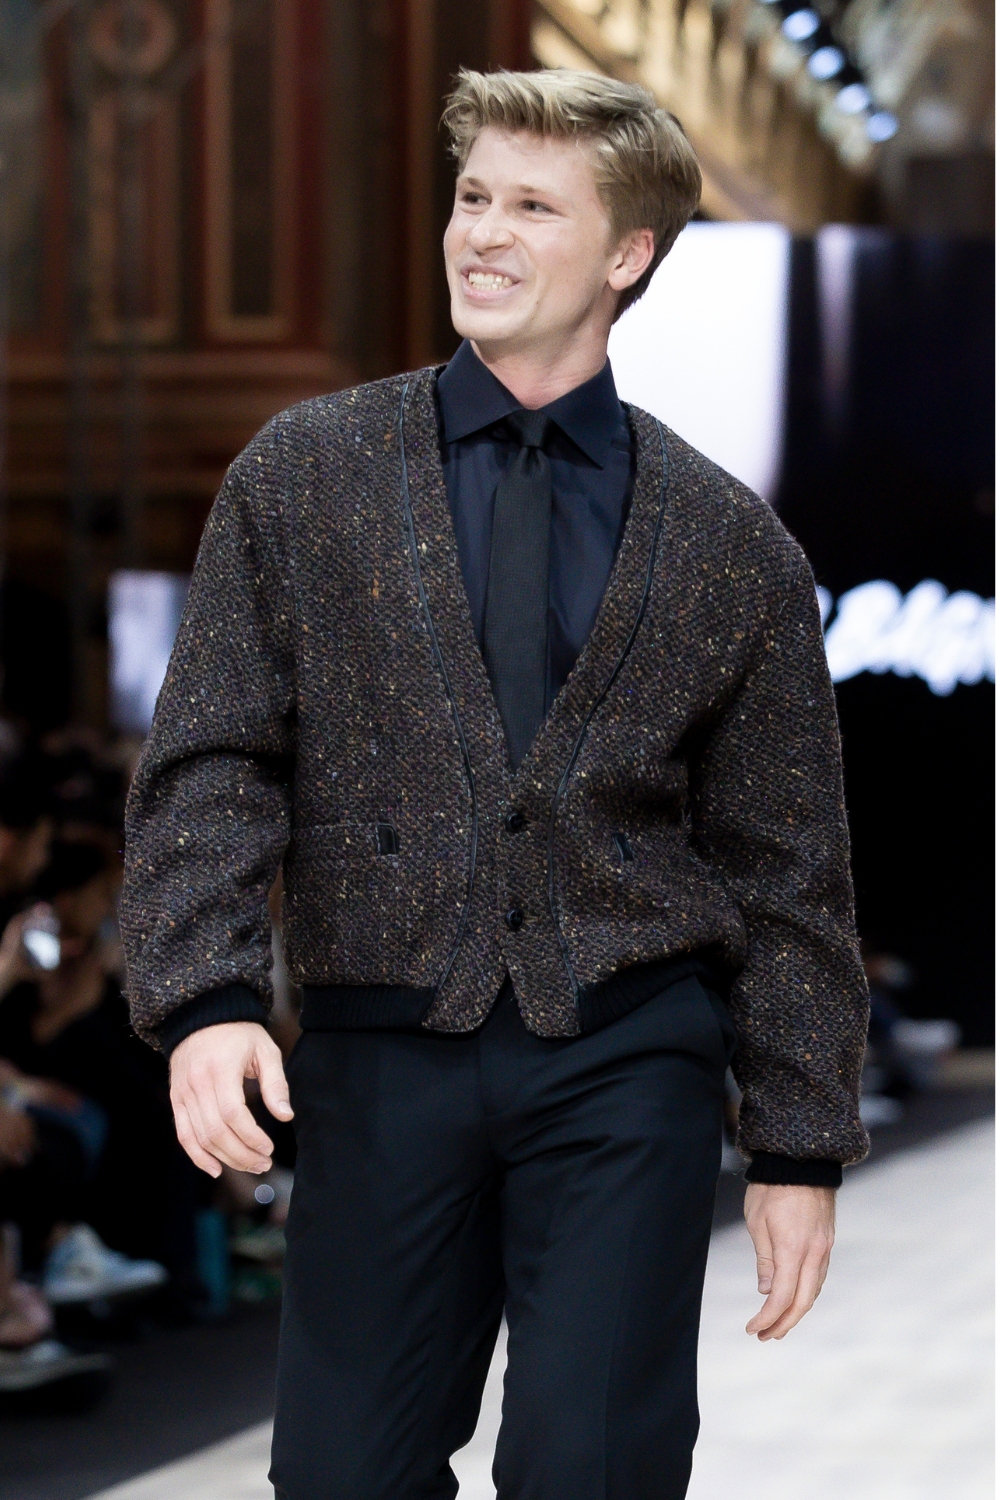 Robert Irwin wearing a grey cardigan, black shirt and tie walking a fashion runway.